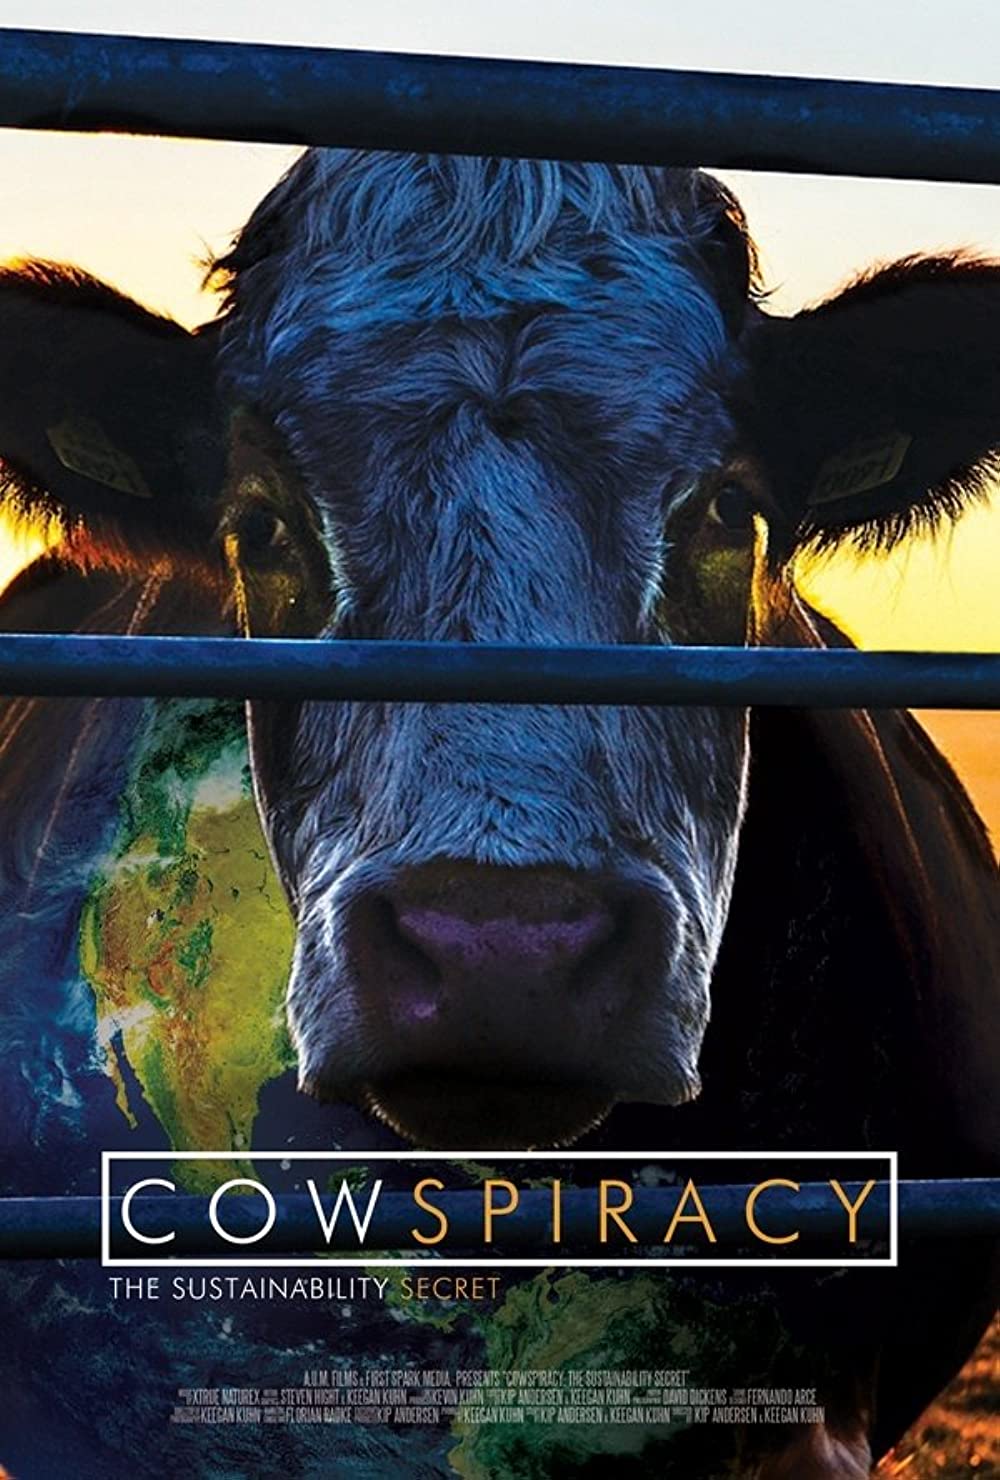 Filmbeschreibung zu Cowspiracy: The Sustainability Secret